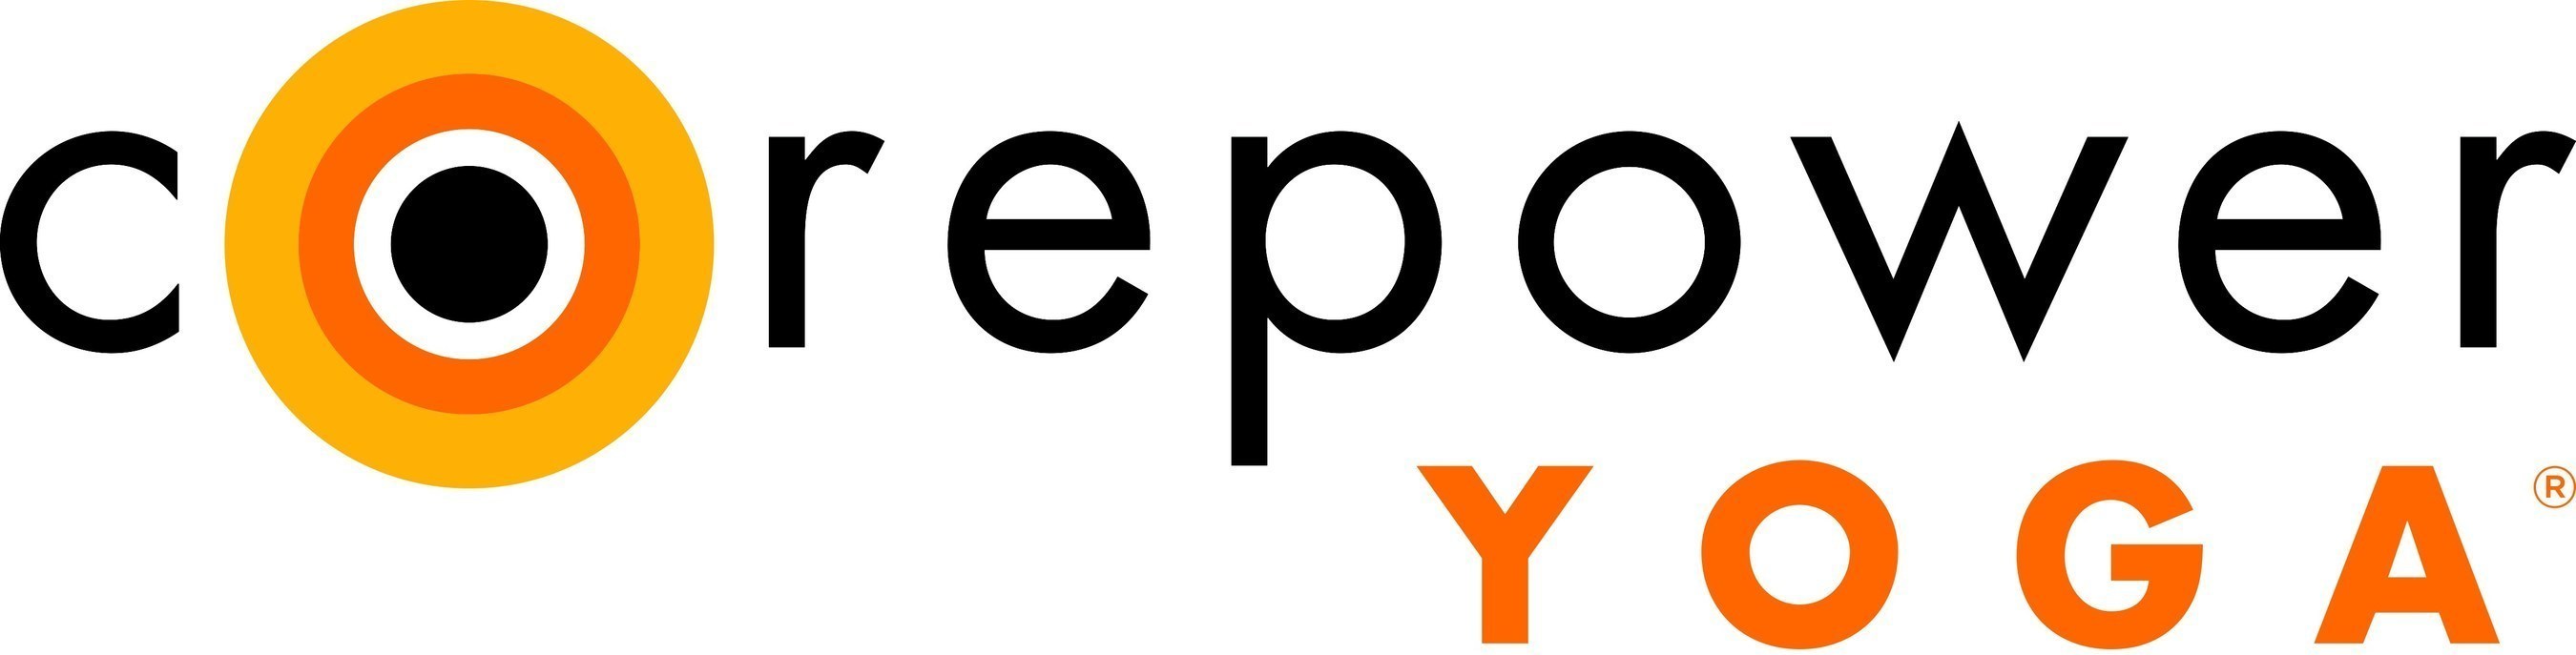 CorePower Yoga Announces New York City Launch